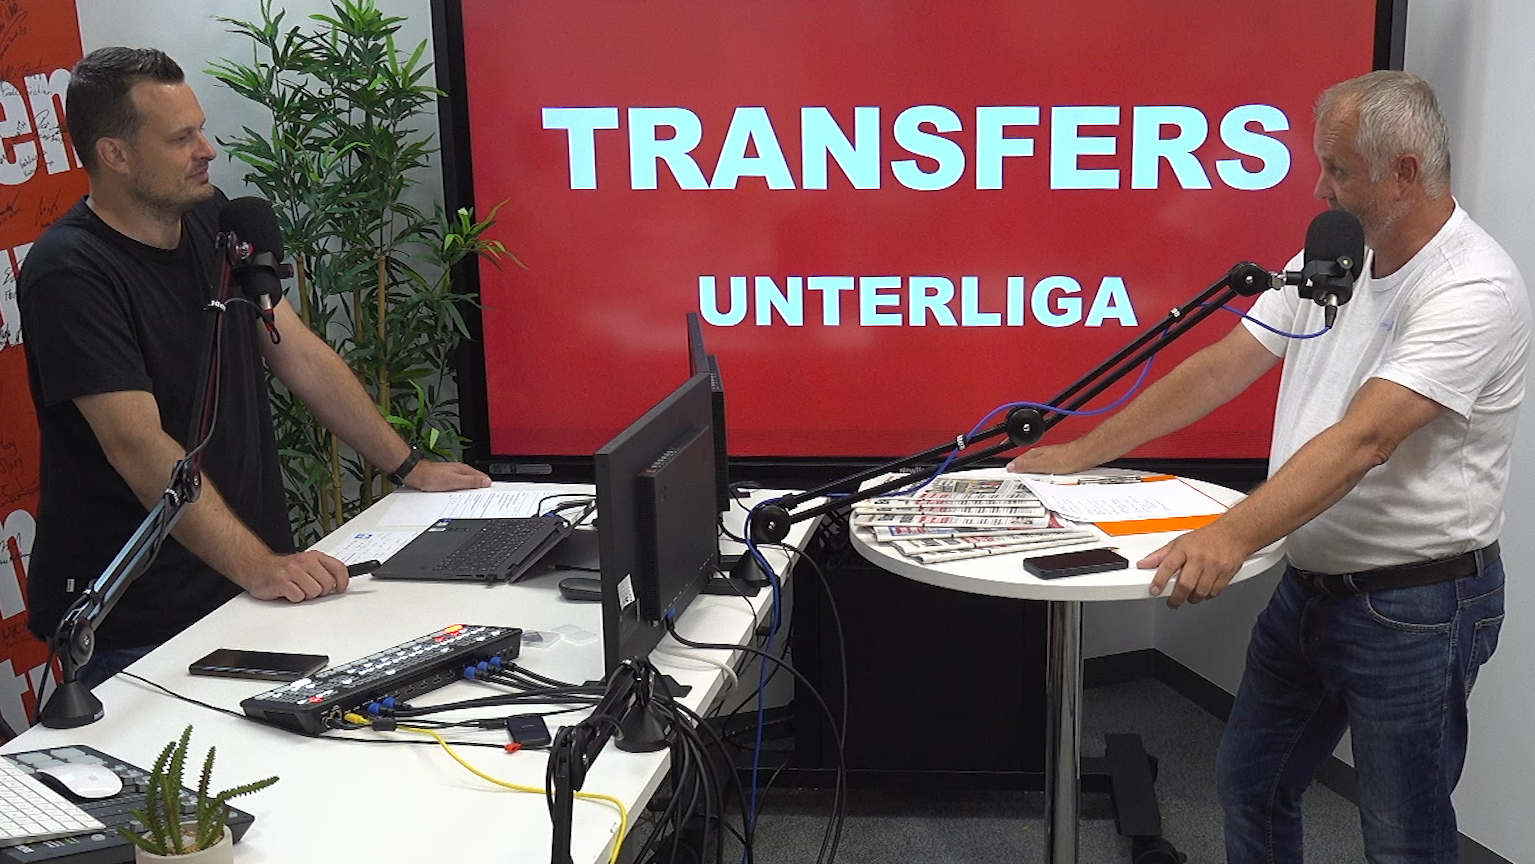 Patrick Jochum and Gunter Motz analyze the lower house transfers. (Bild: JOMO KG)